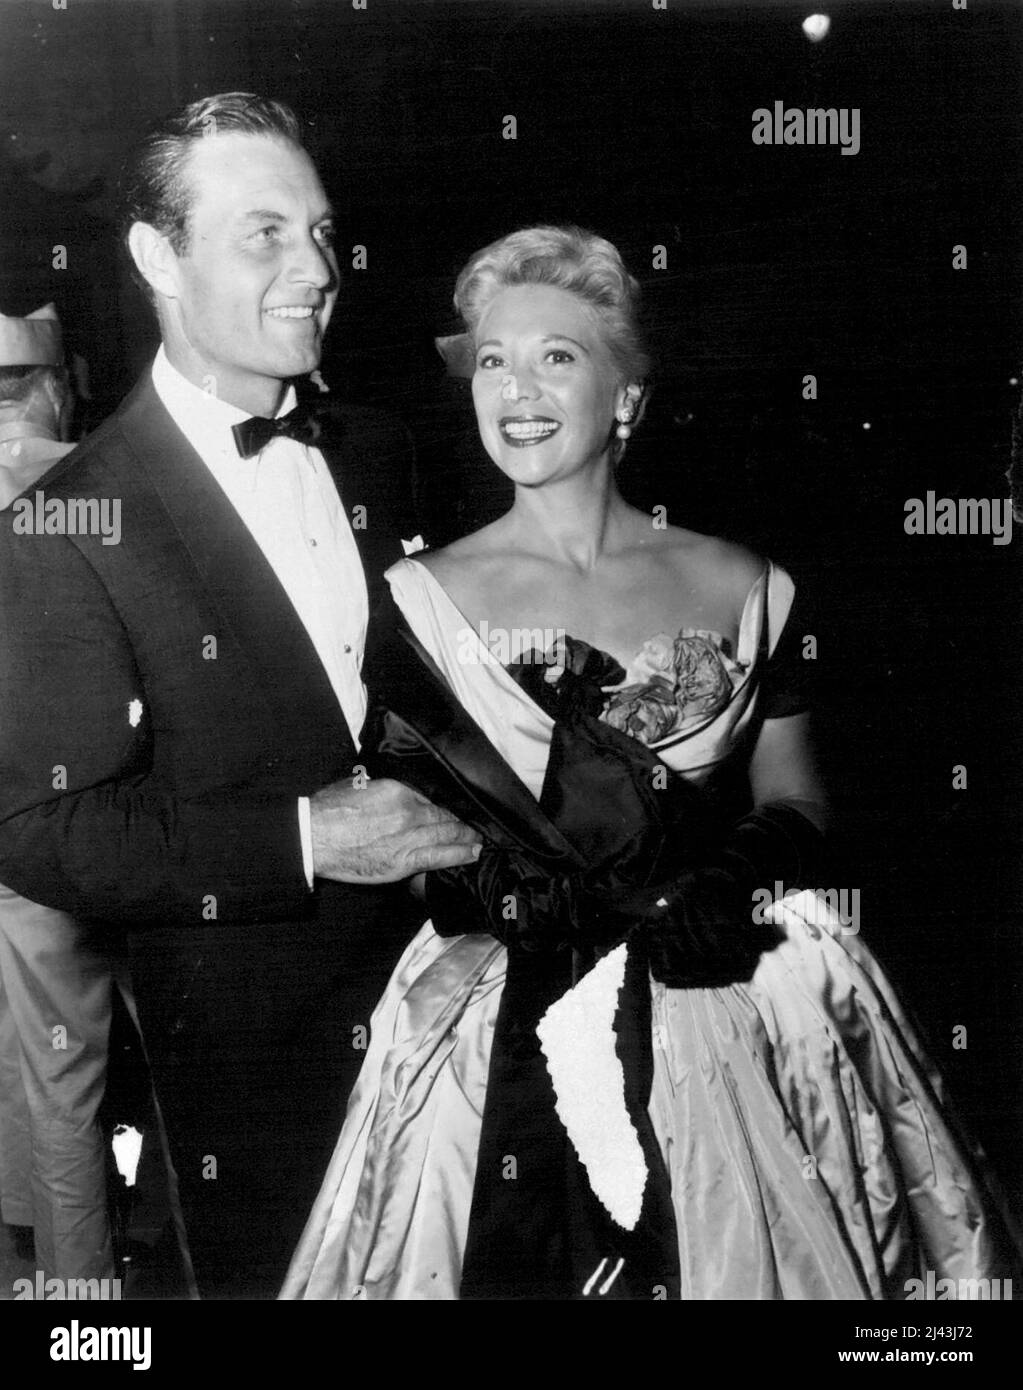 George Montgomery & Dinah Shore *****. June 14, 1955. Stock Photo